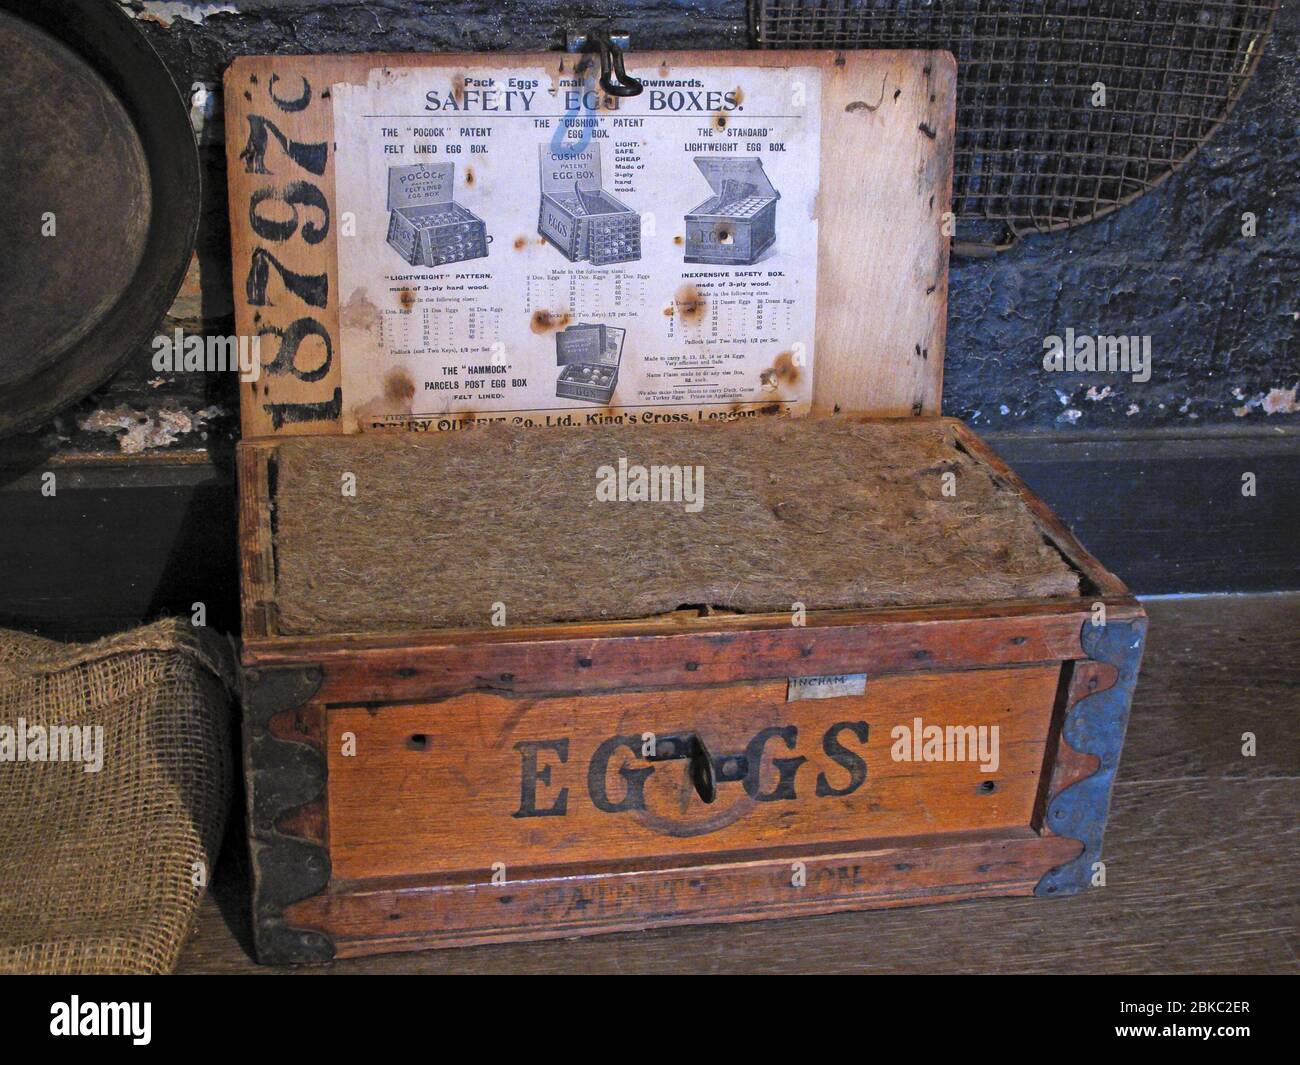 Pocock Safety Egg box, Pocock's Patent,wooden box, Stock Photo